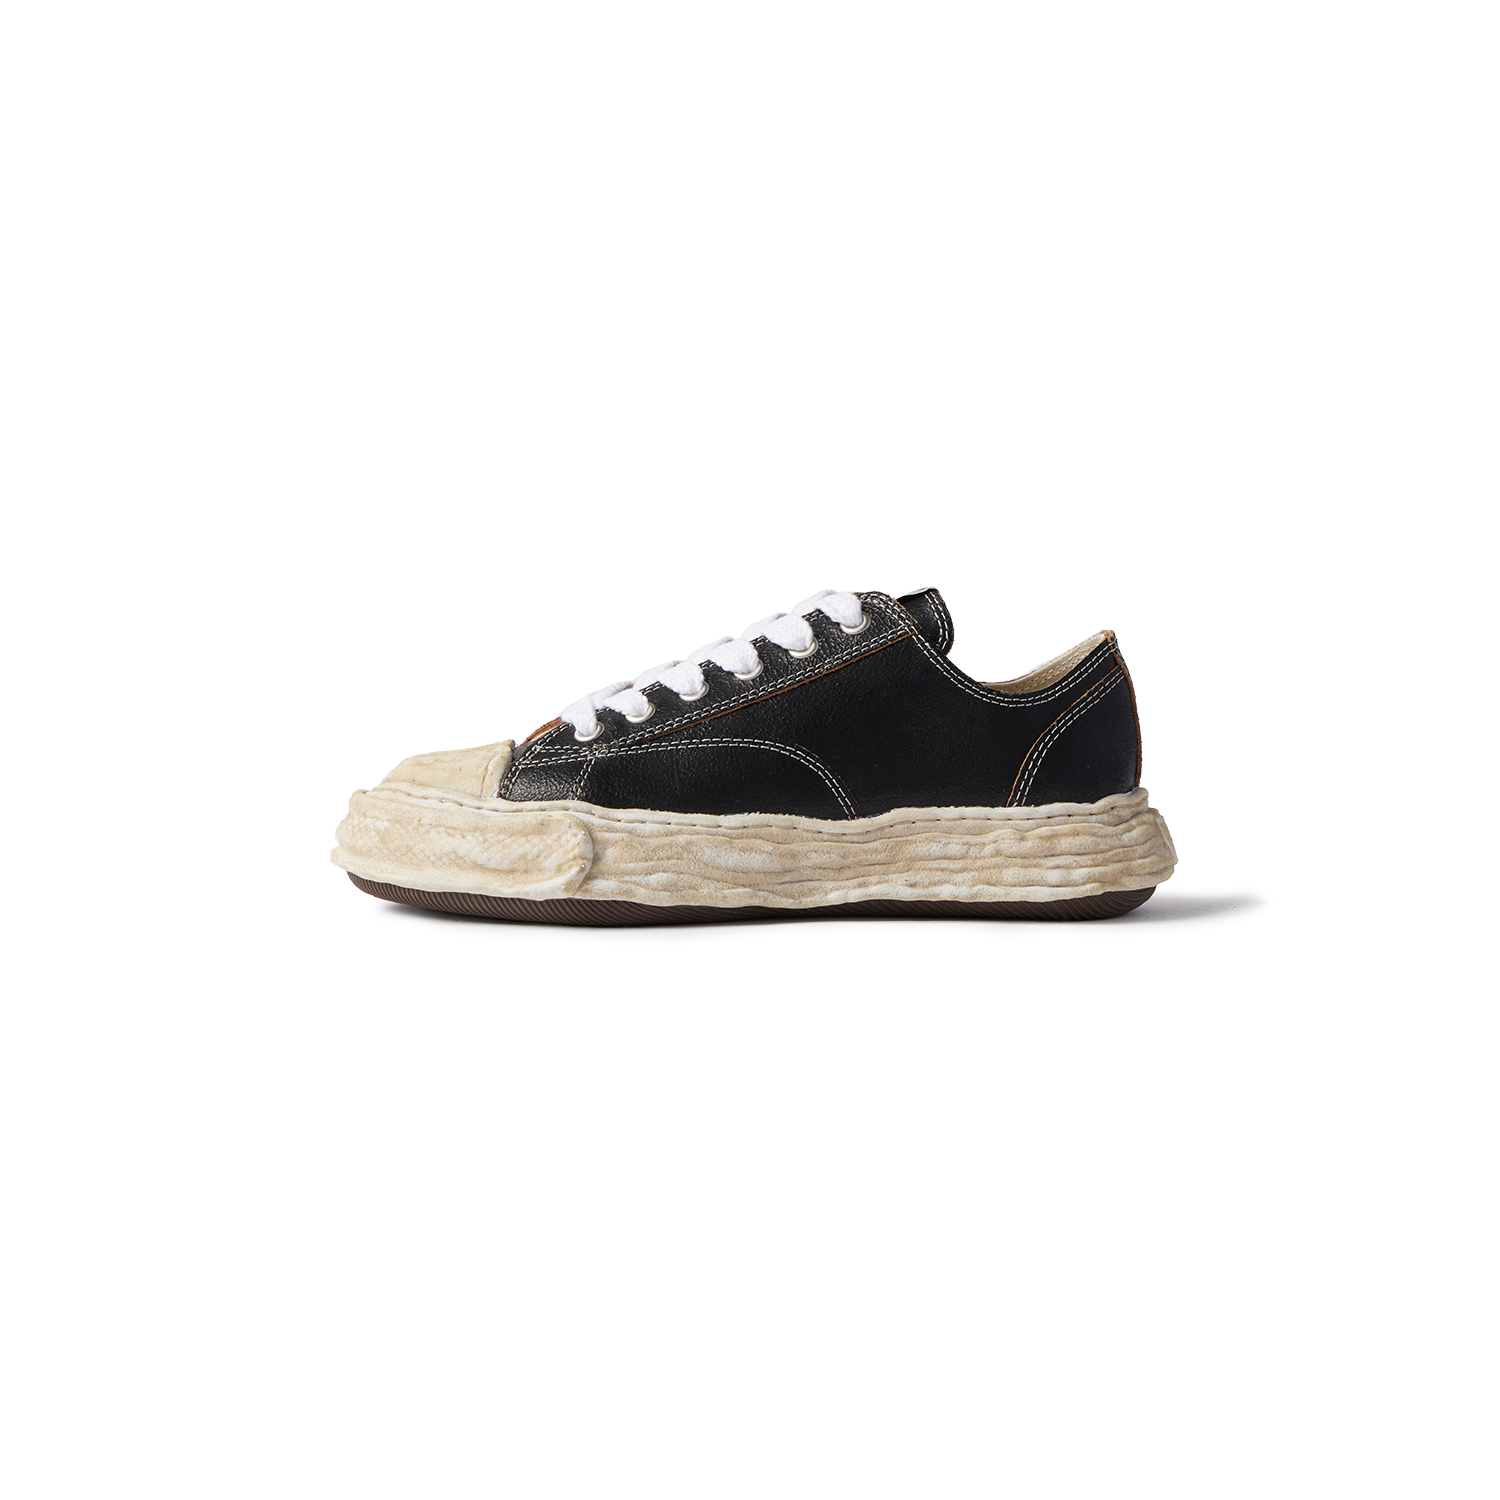 MAISON MIHARA YASUHIRO - Peterson Low Cracking Leather Sneaker product image